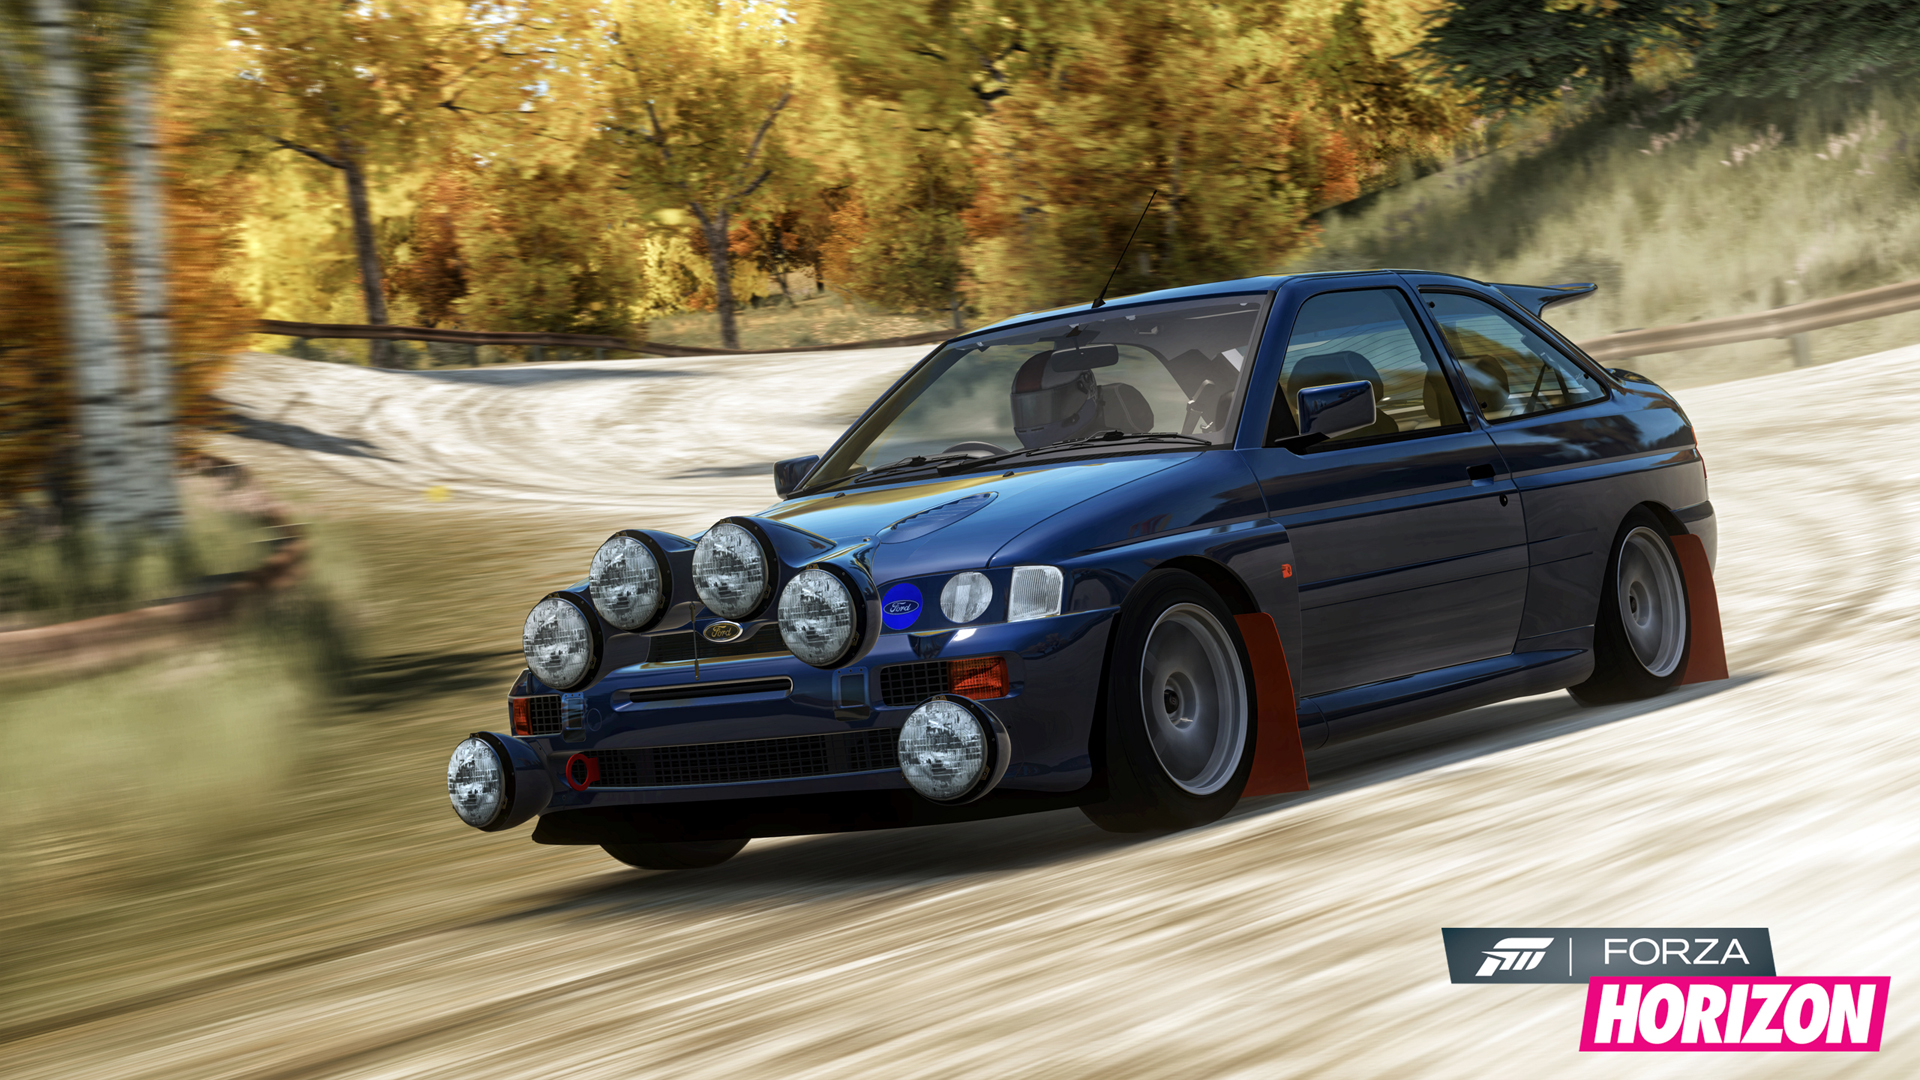 Download Forza Horizon Rally Expansion Now via Xbox Live